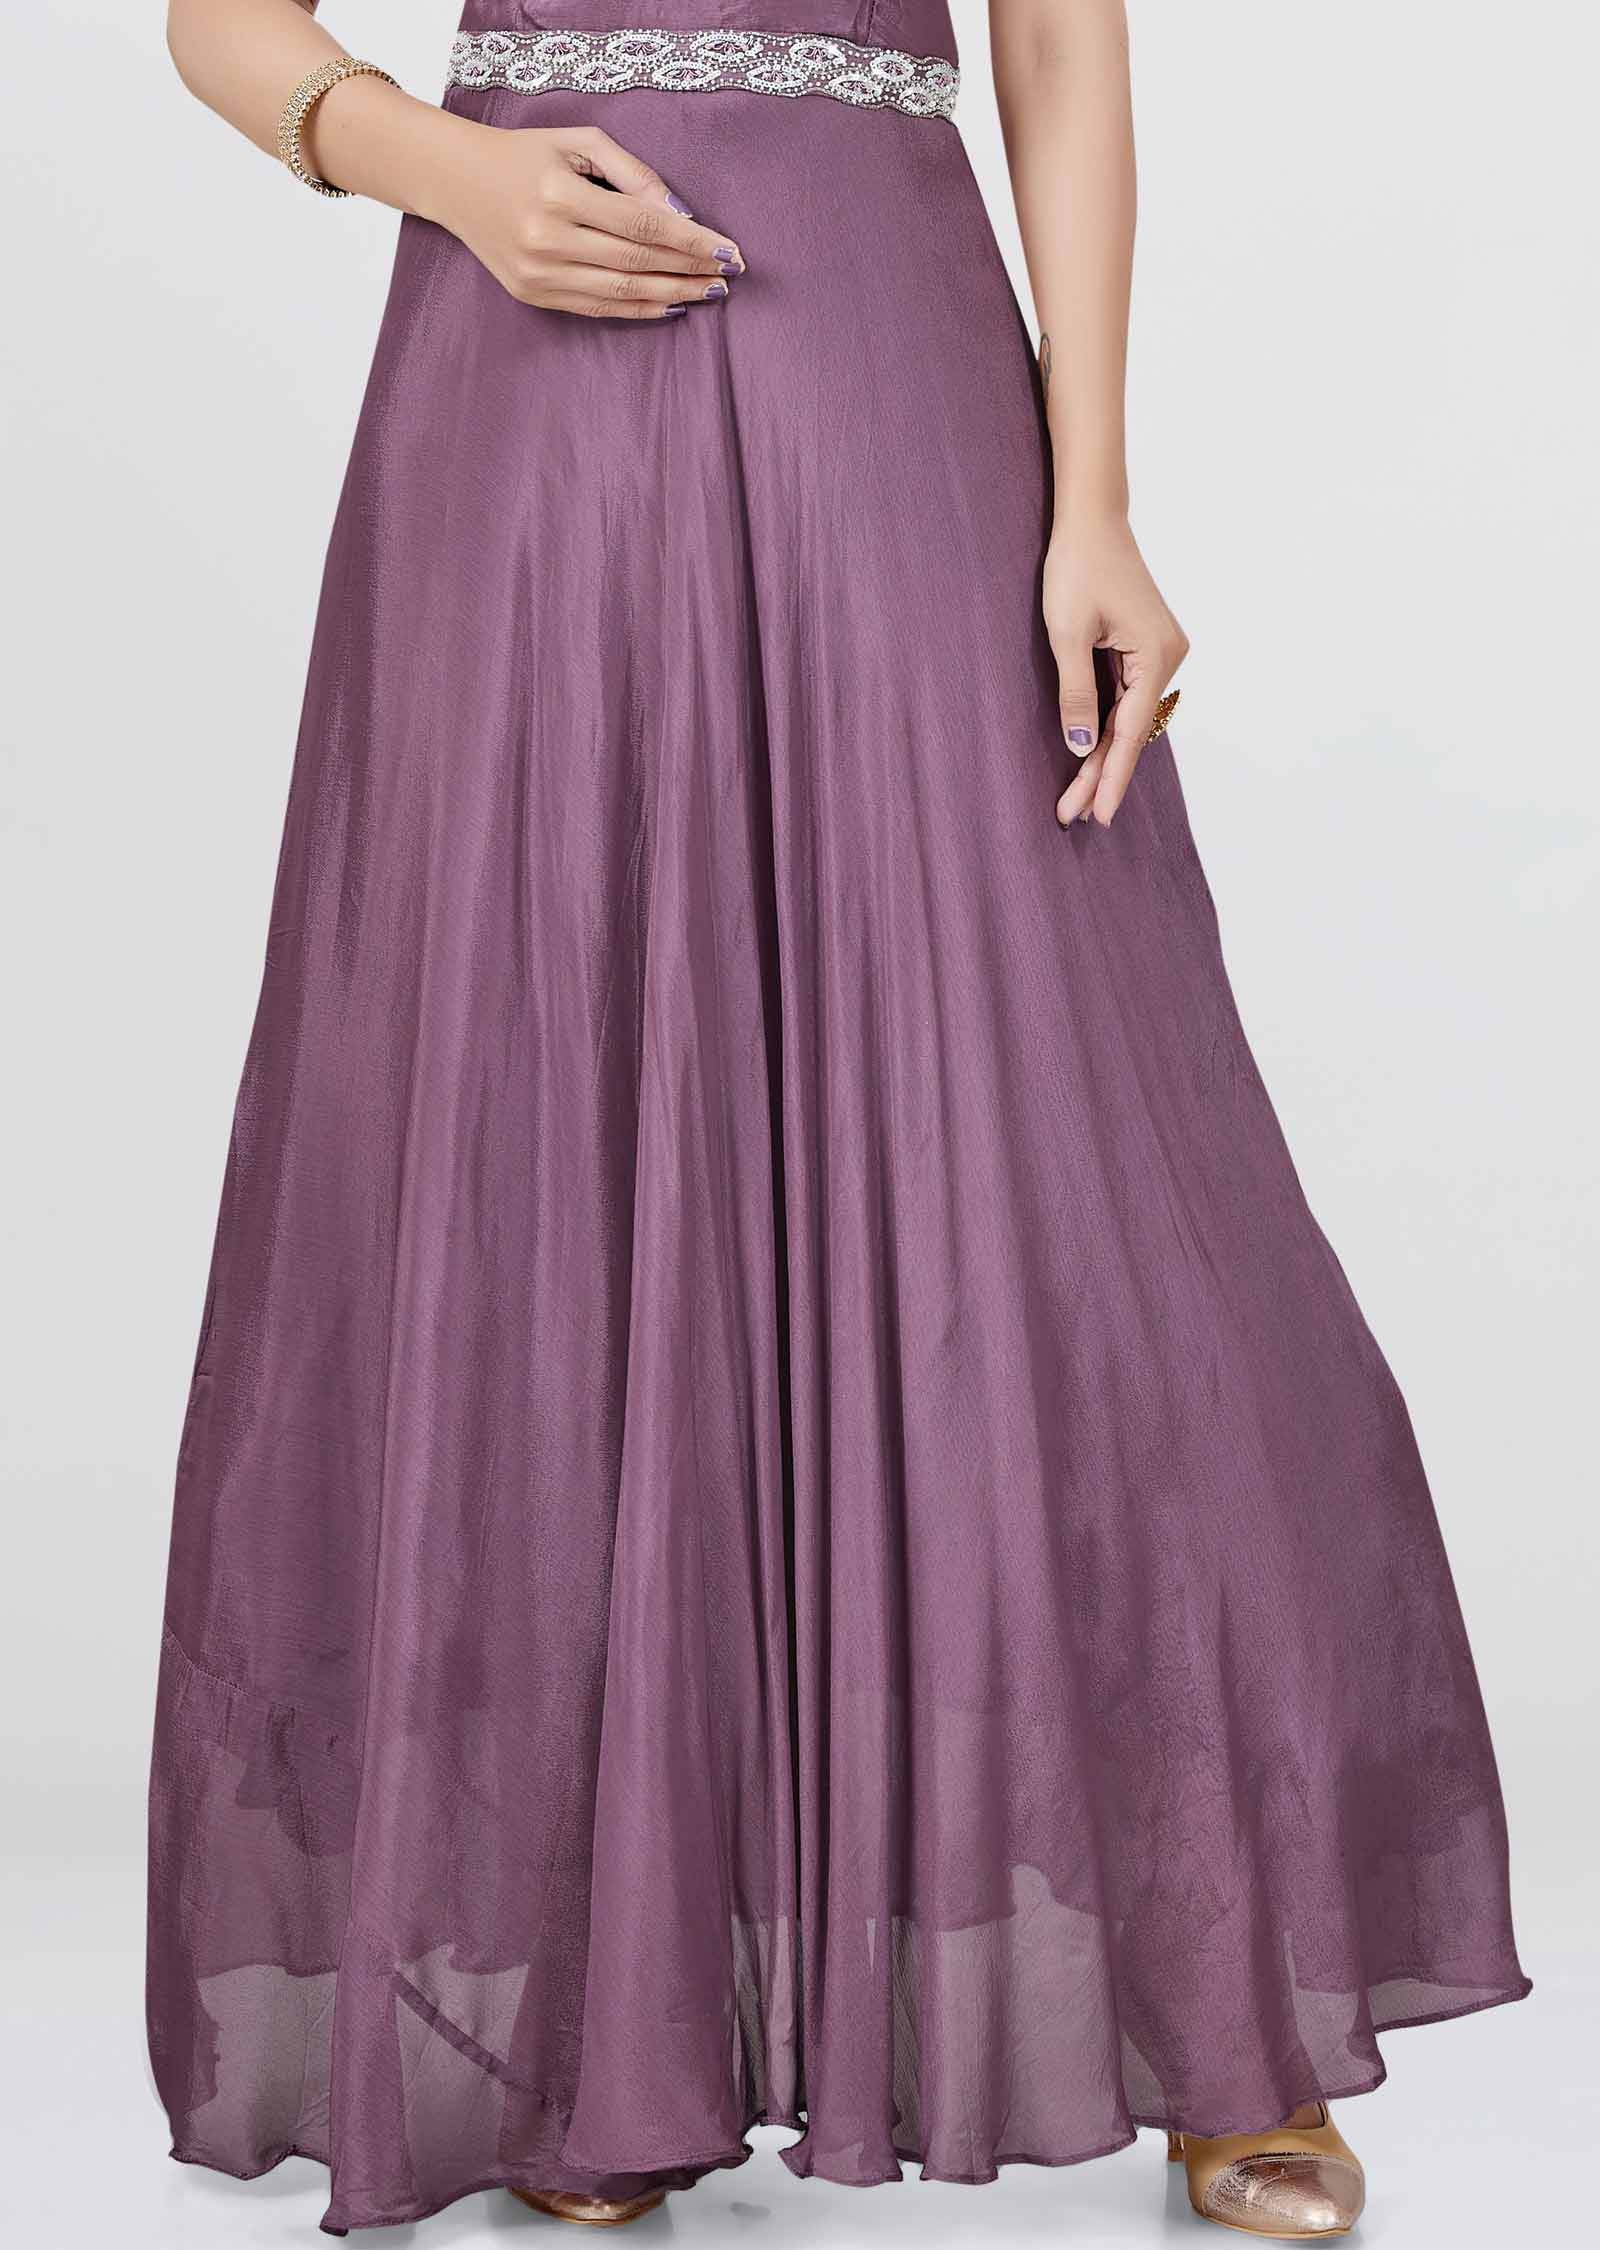 Mauve Pink Chinnon Zardosi & Embroidered Gown